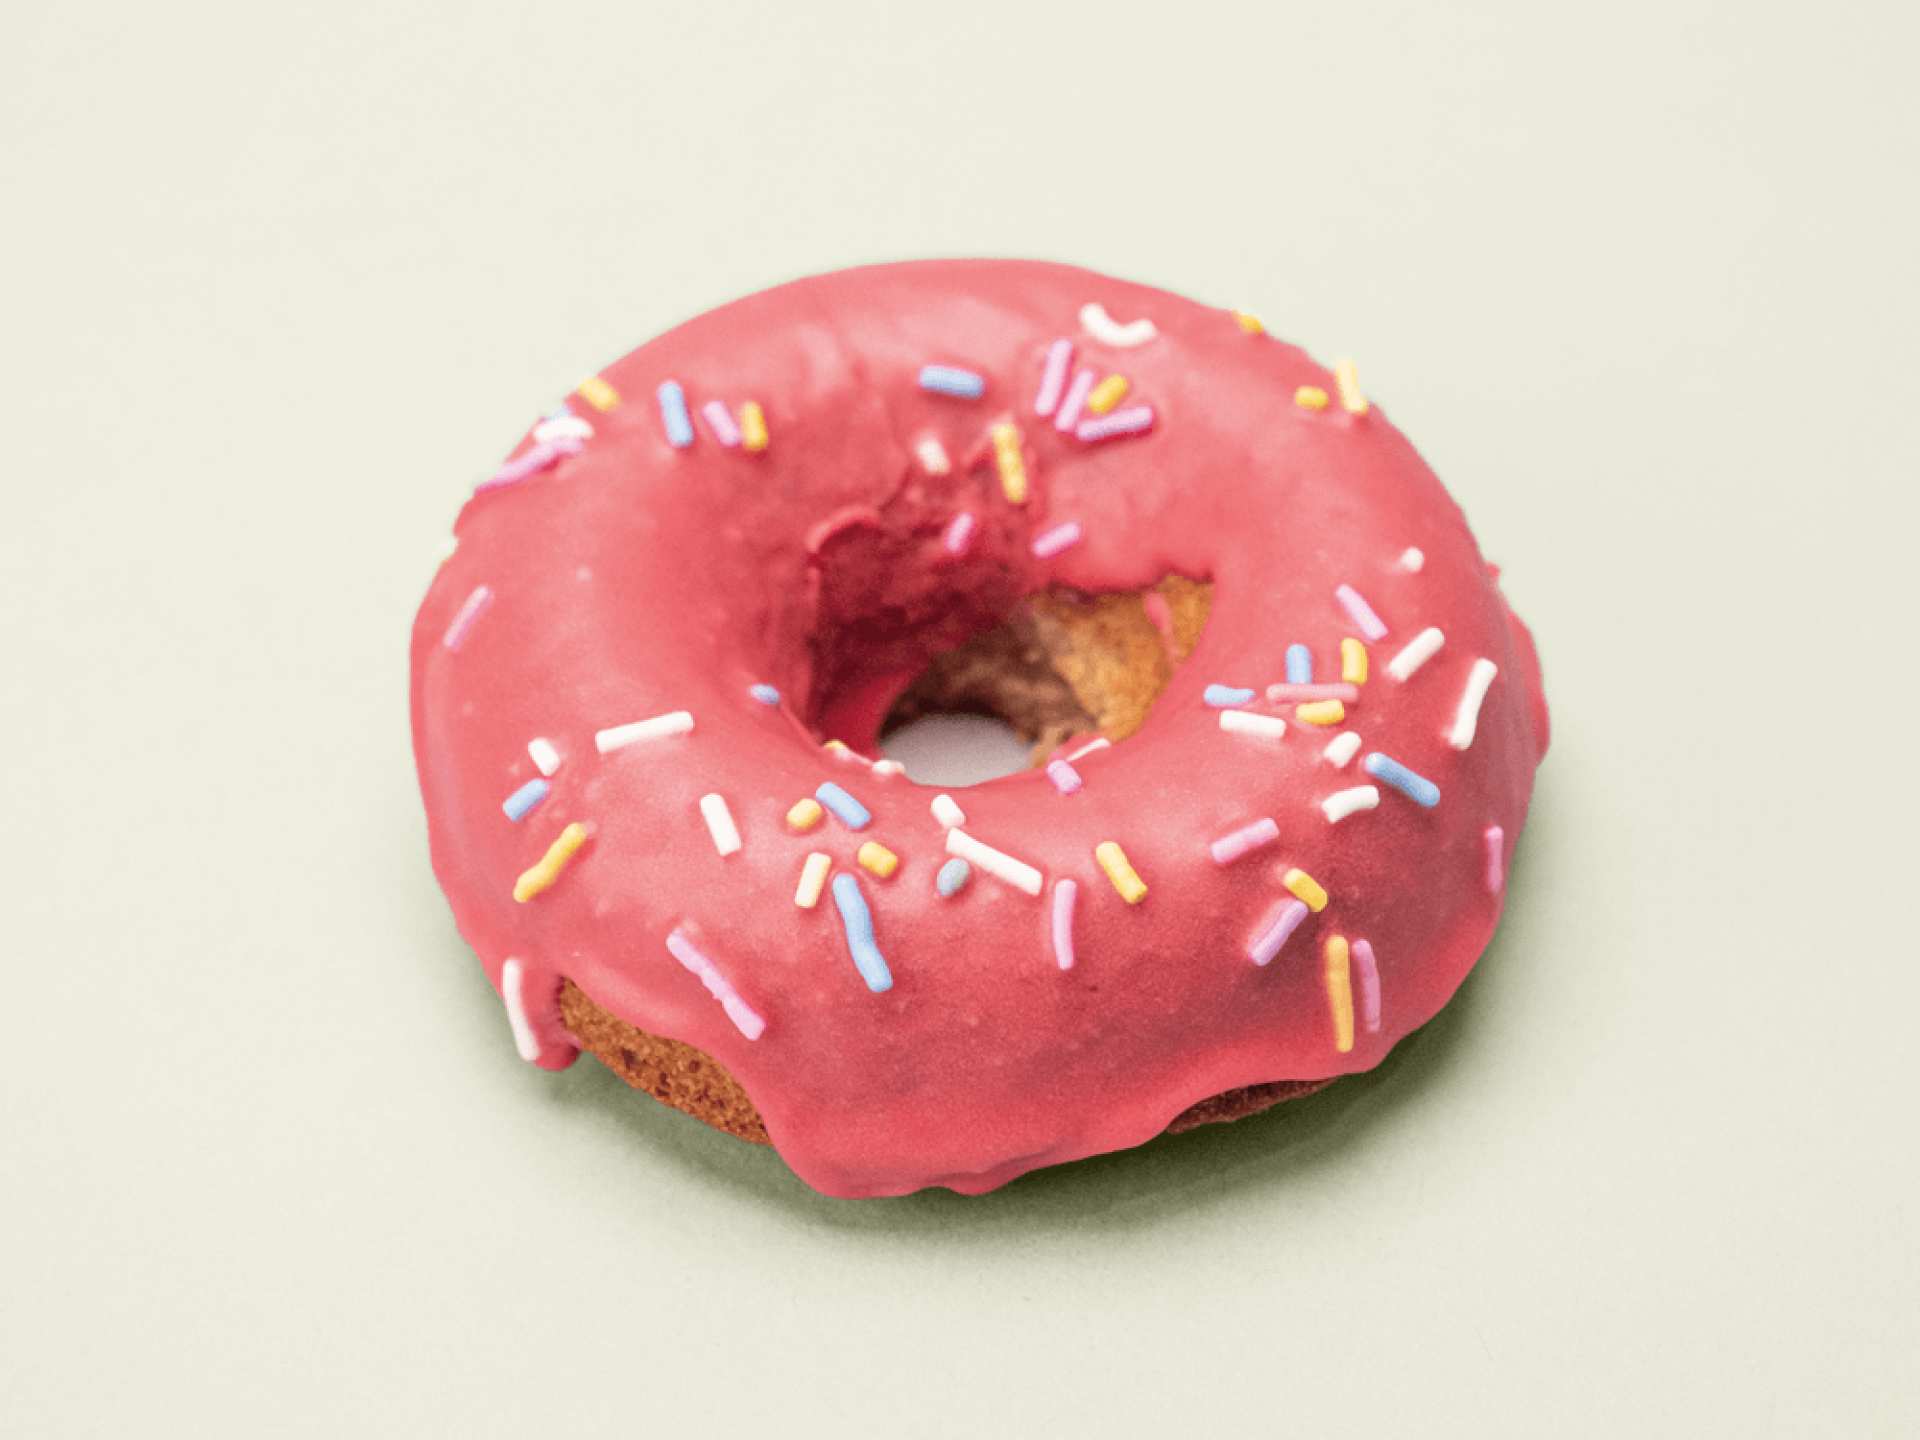 Best doughnuts in Toronto | A pink glazed doughnut from Tori's Bakeshop